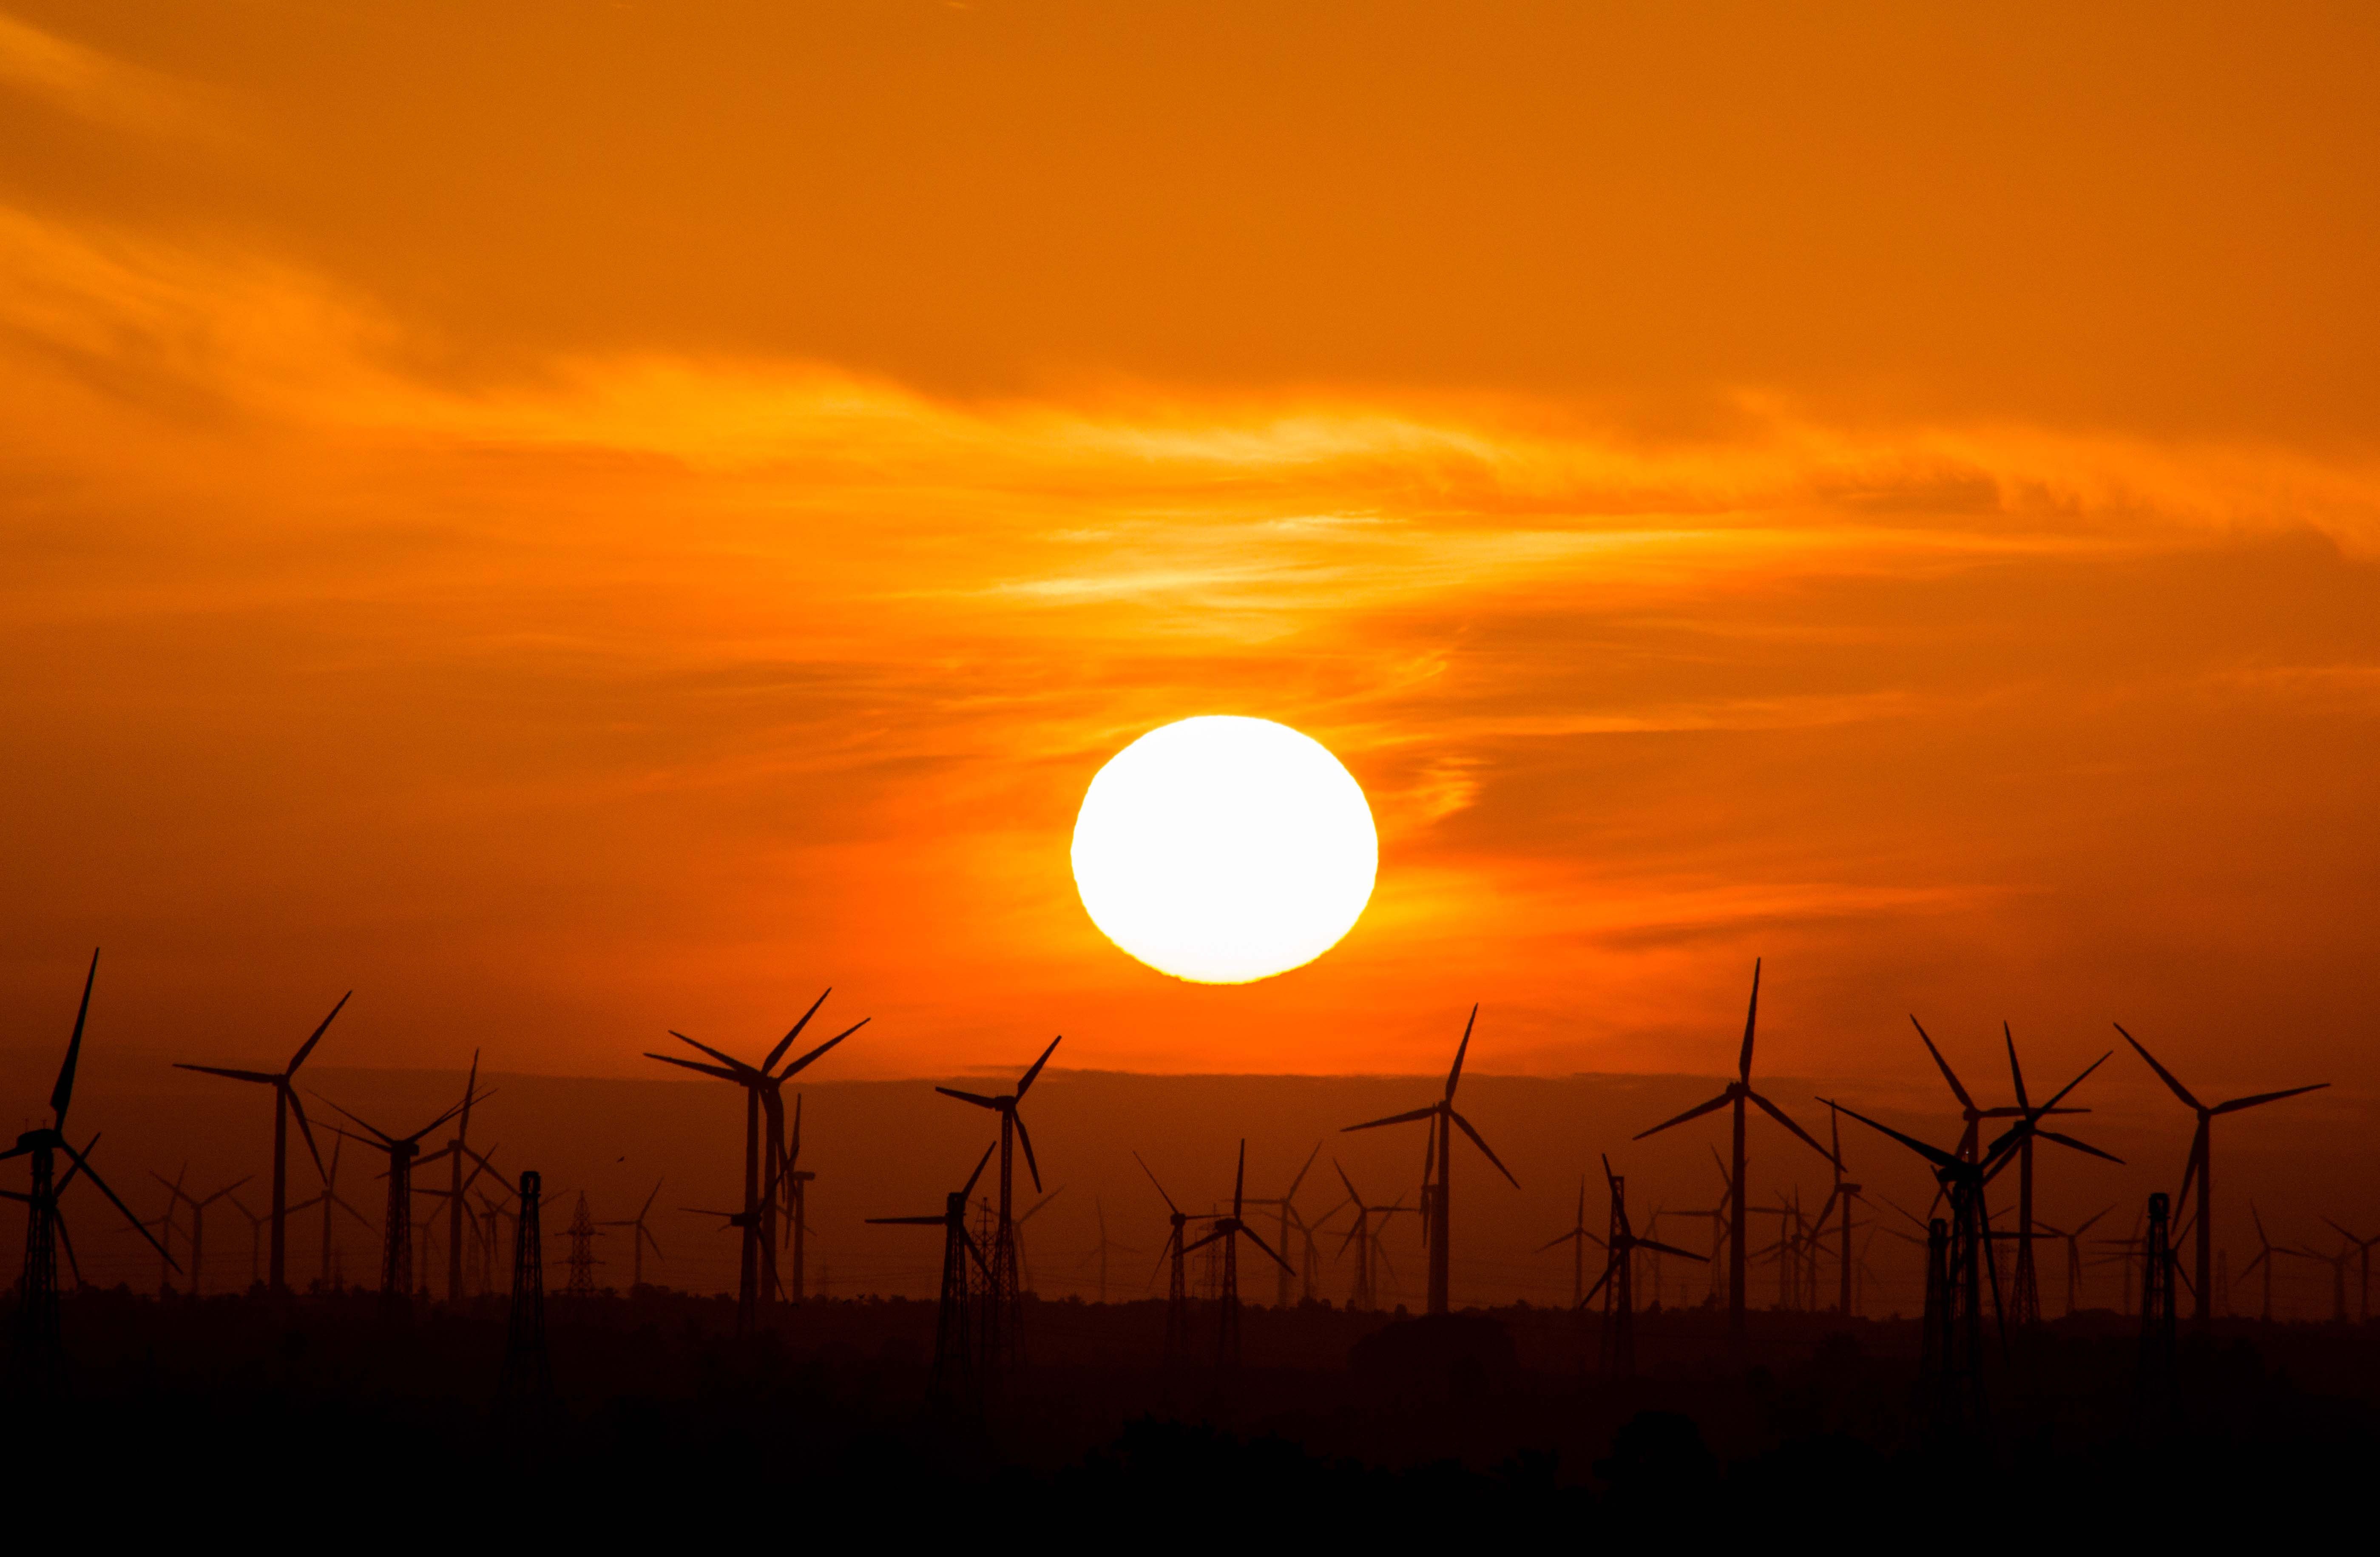 A wind energy farm at sunset.